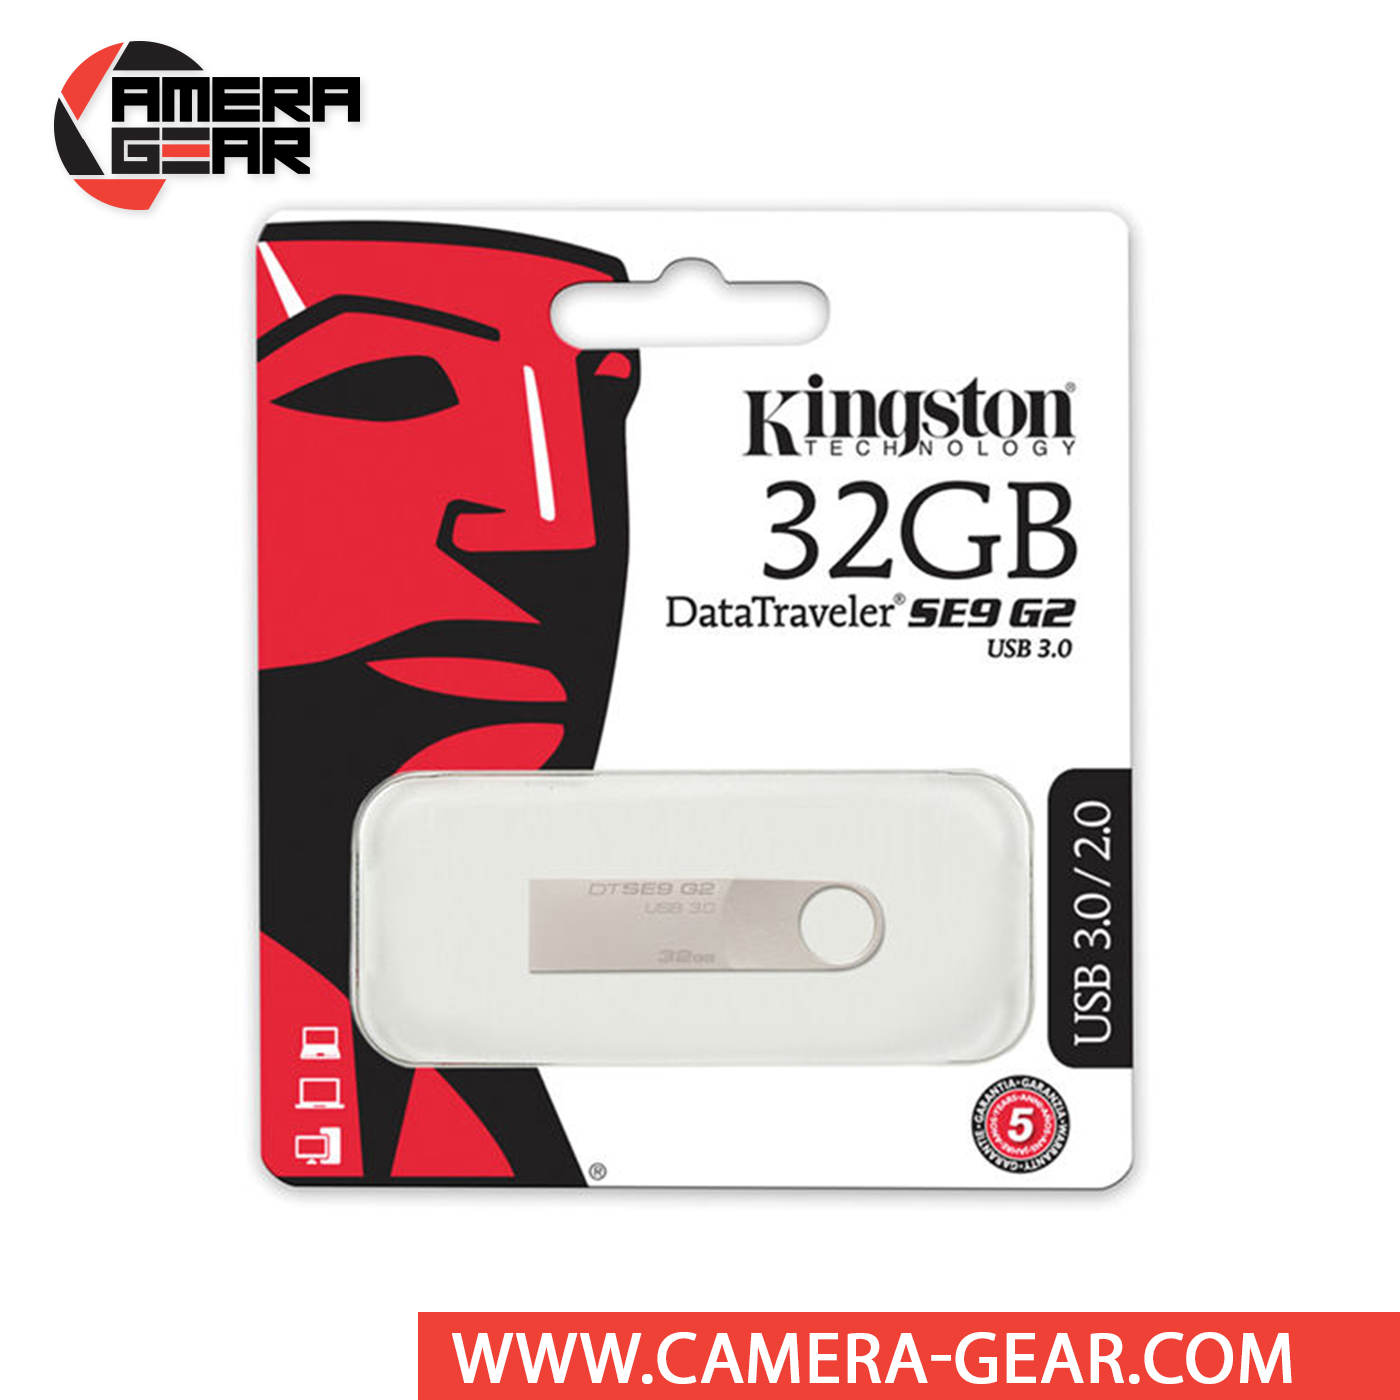 Kingston DataTraveler SE9 USB 3.0 Flash Drive - Camera Gear